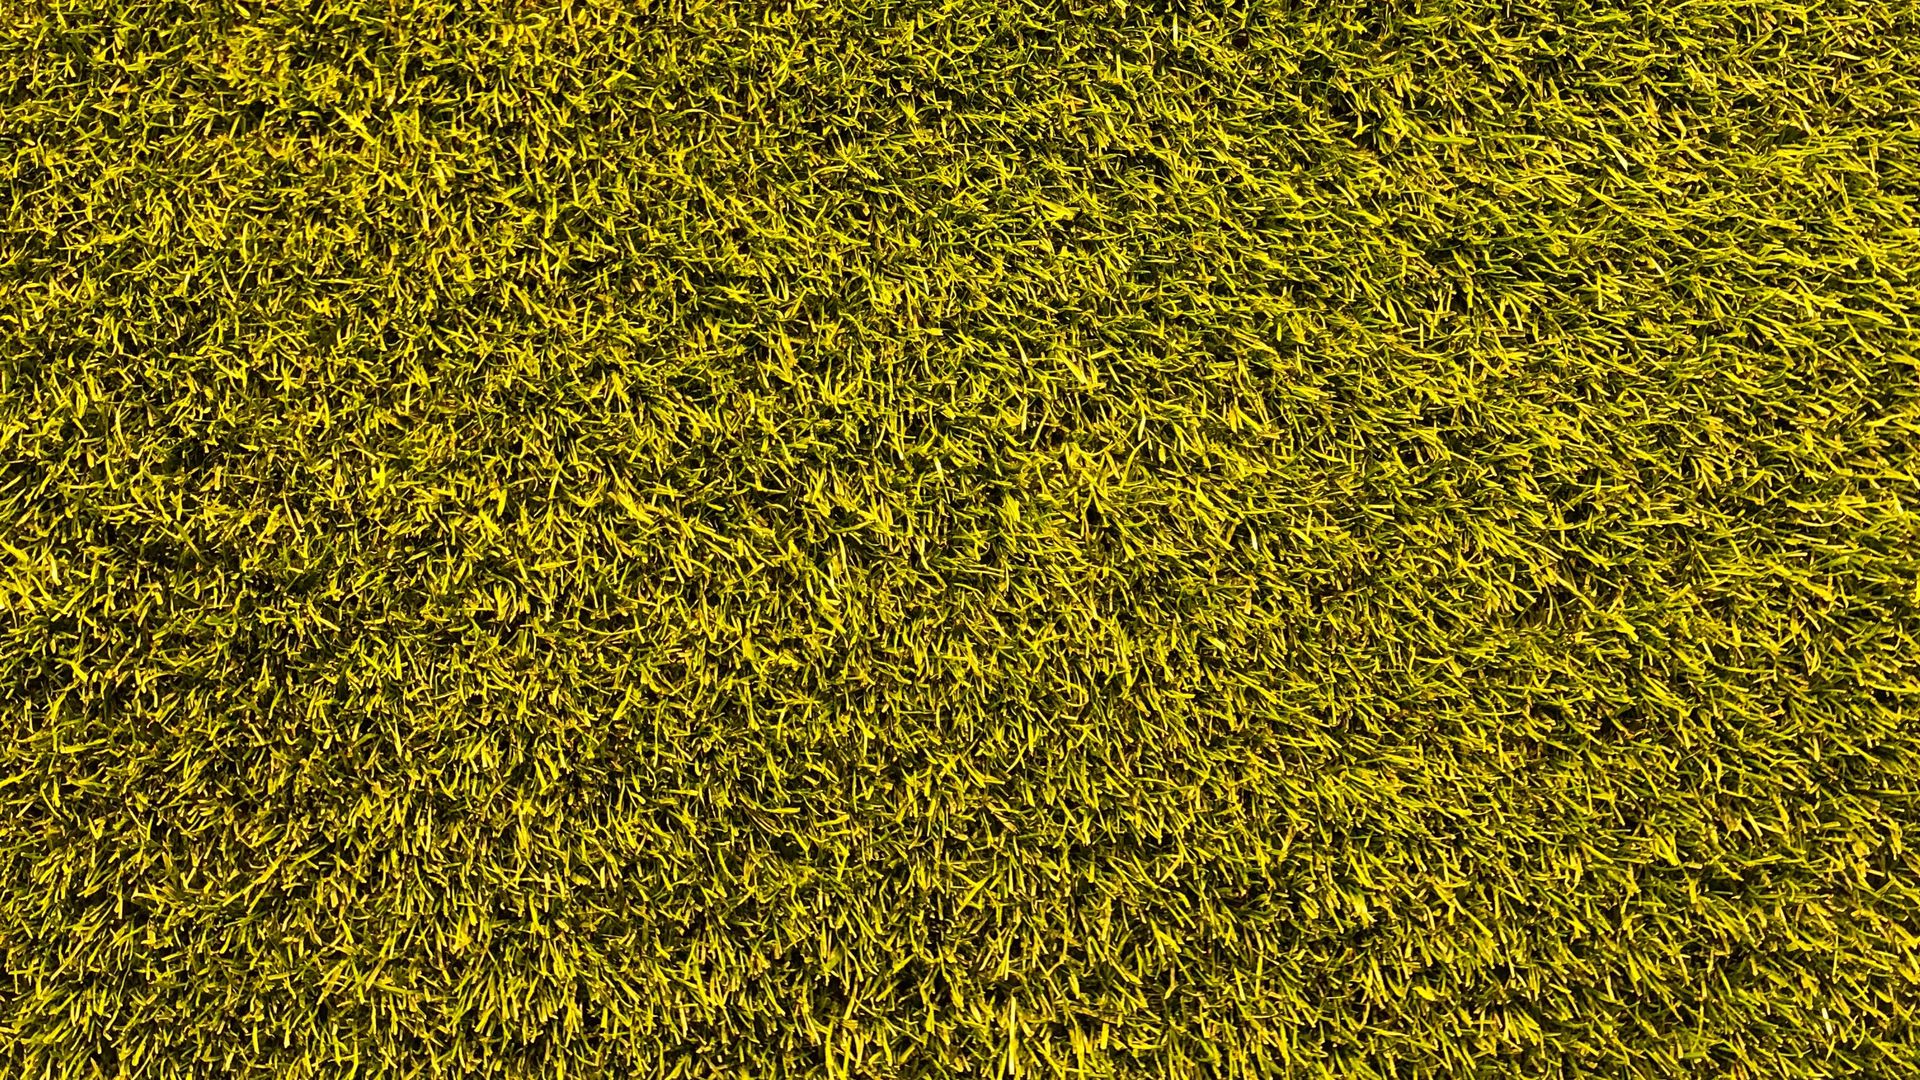 Download wallpaper 1920x1080 lawn, grass, texture, green full hd, hdtv, fhd, 1080p HD background